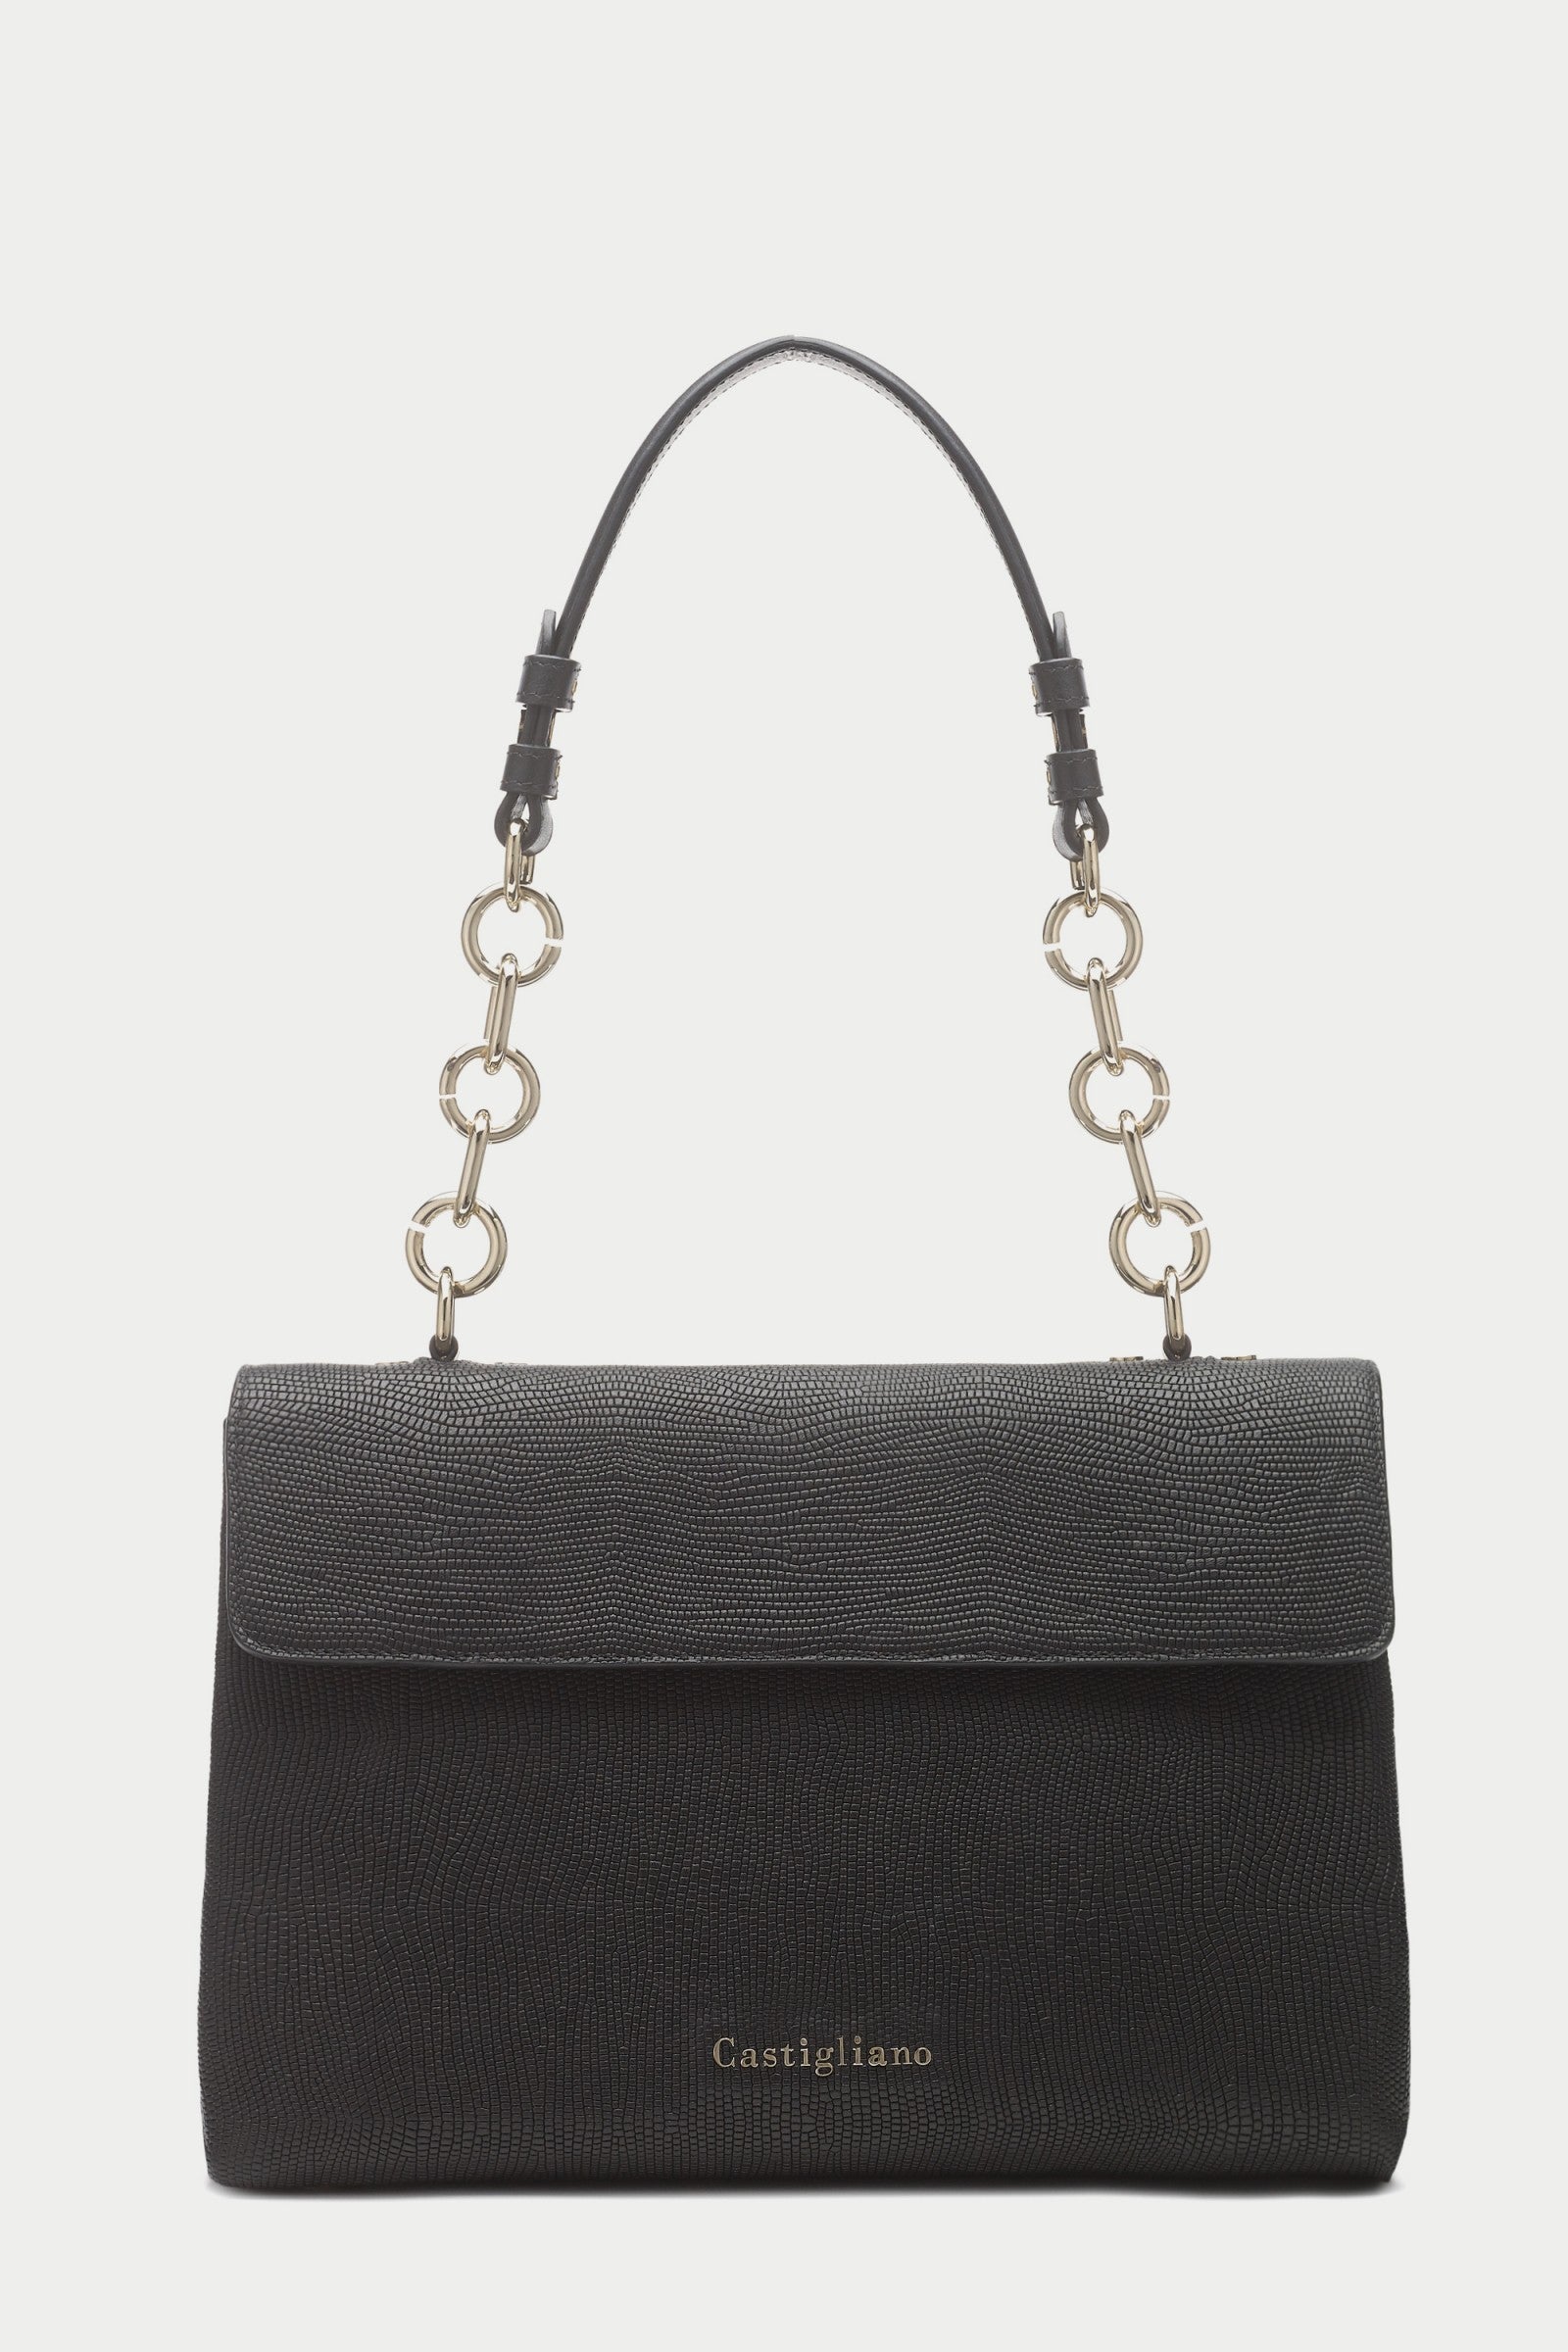 Briella BLACK Textured Leather Bag